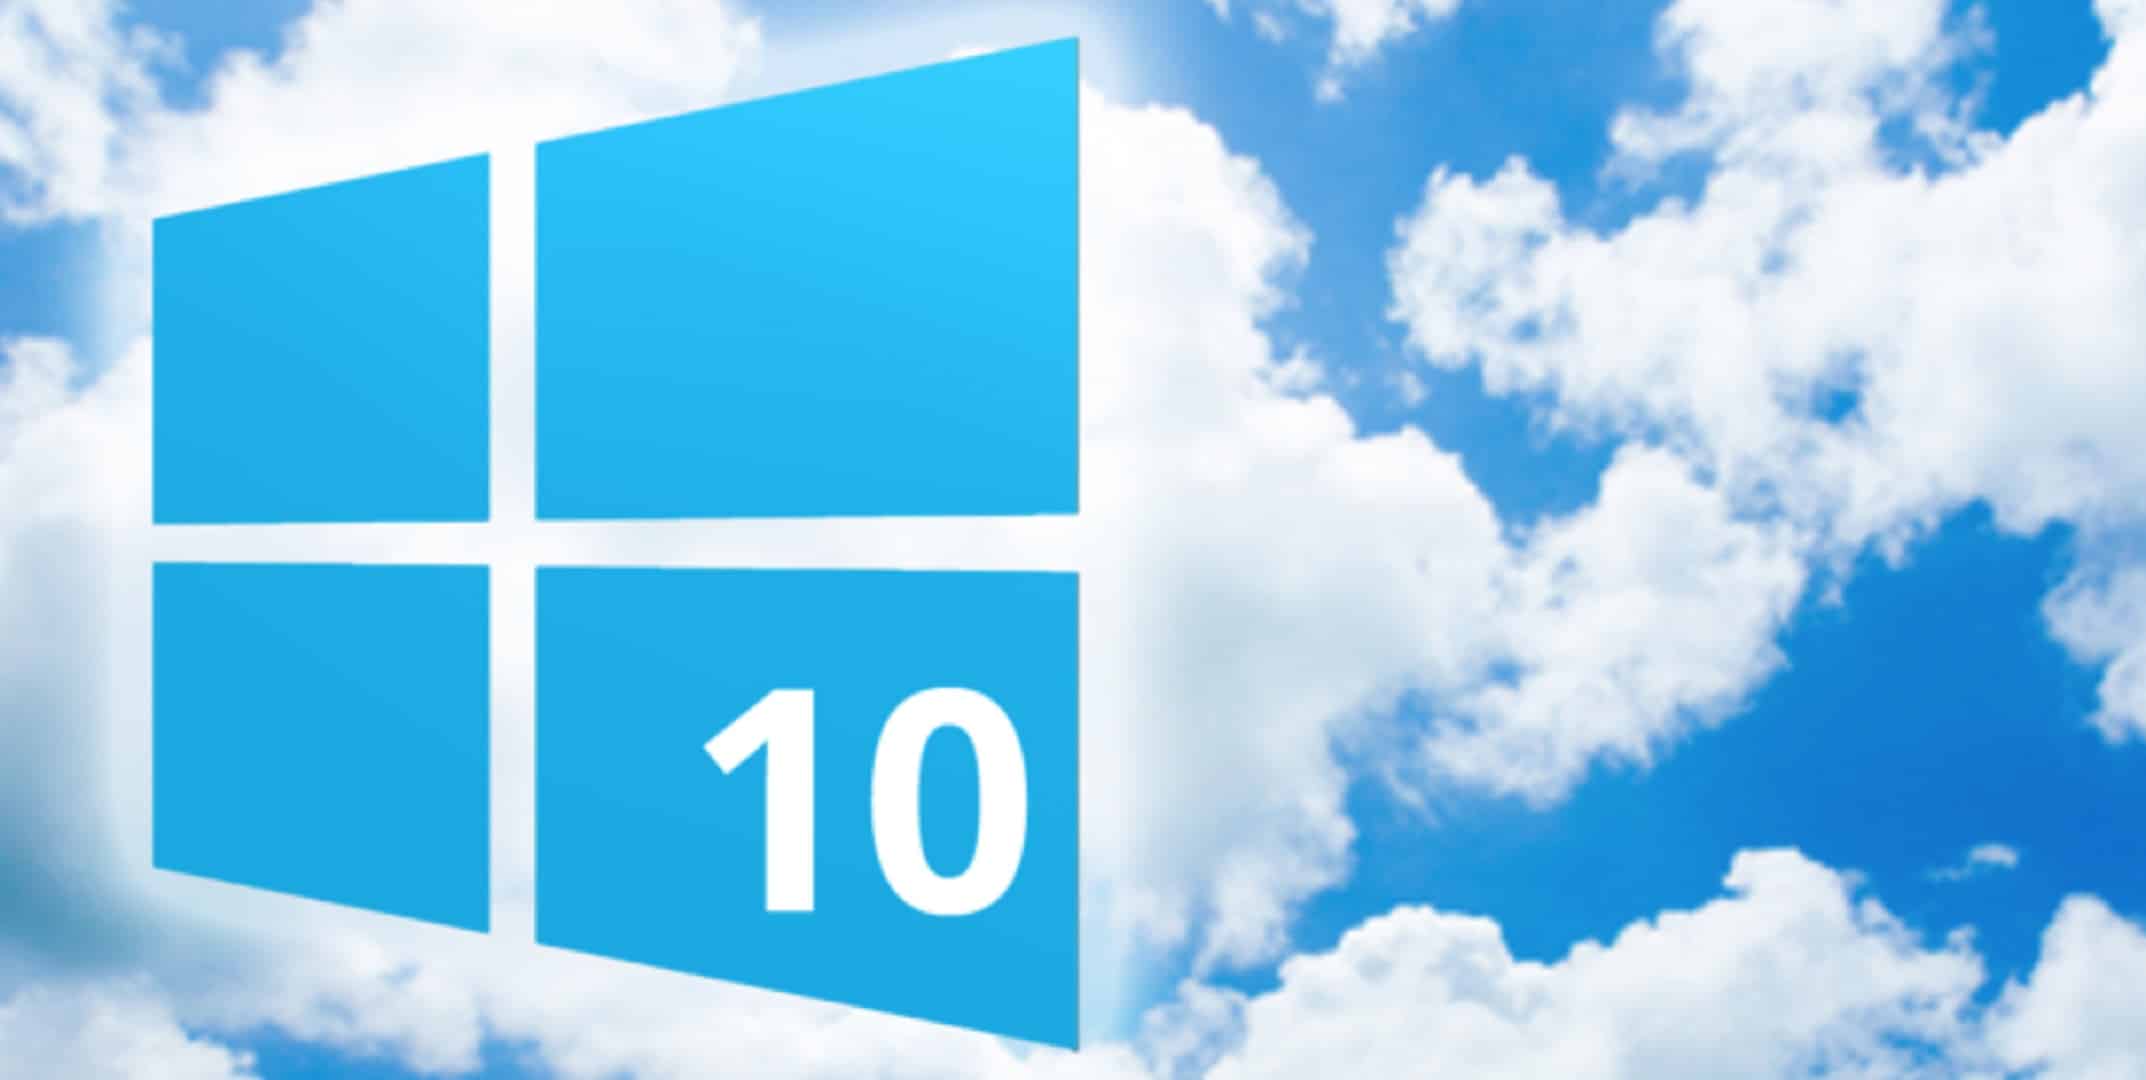 Windows 10 November 2019 update version 1909 Microsoft